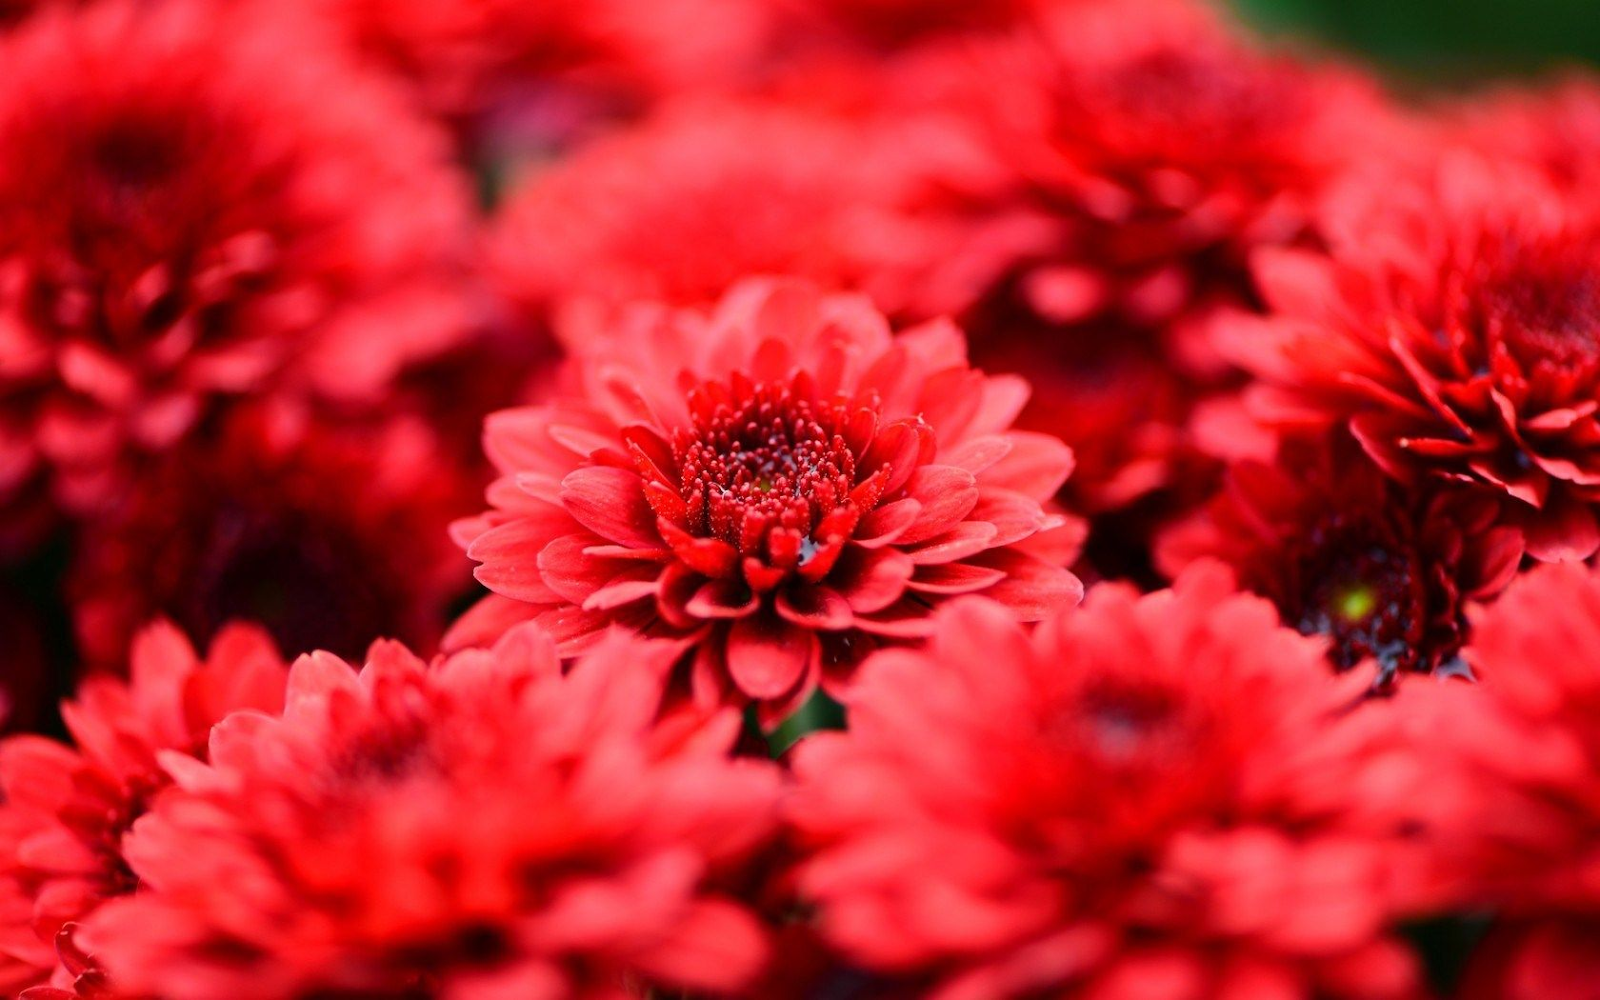 Red Chrysanthemums (Chrysanthemum spp.)